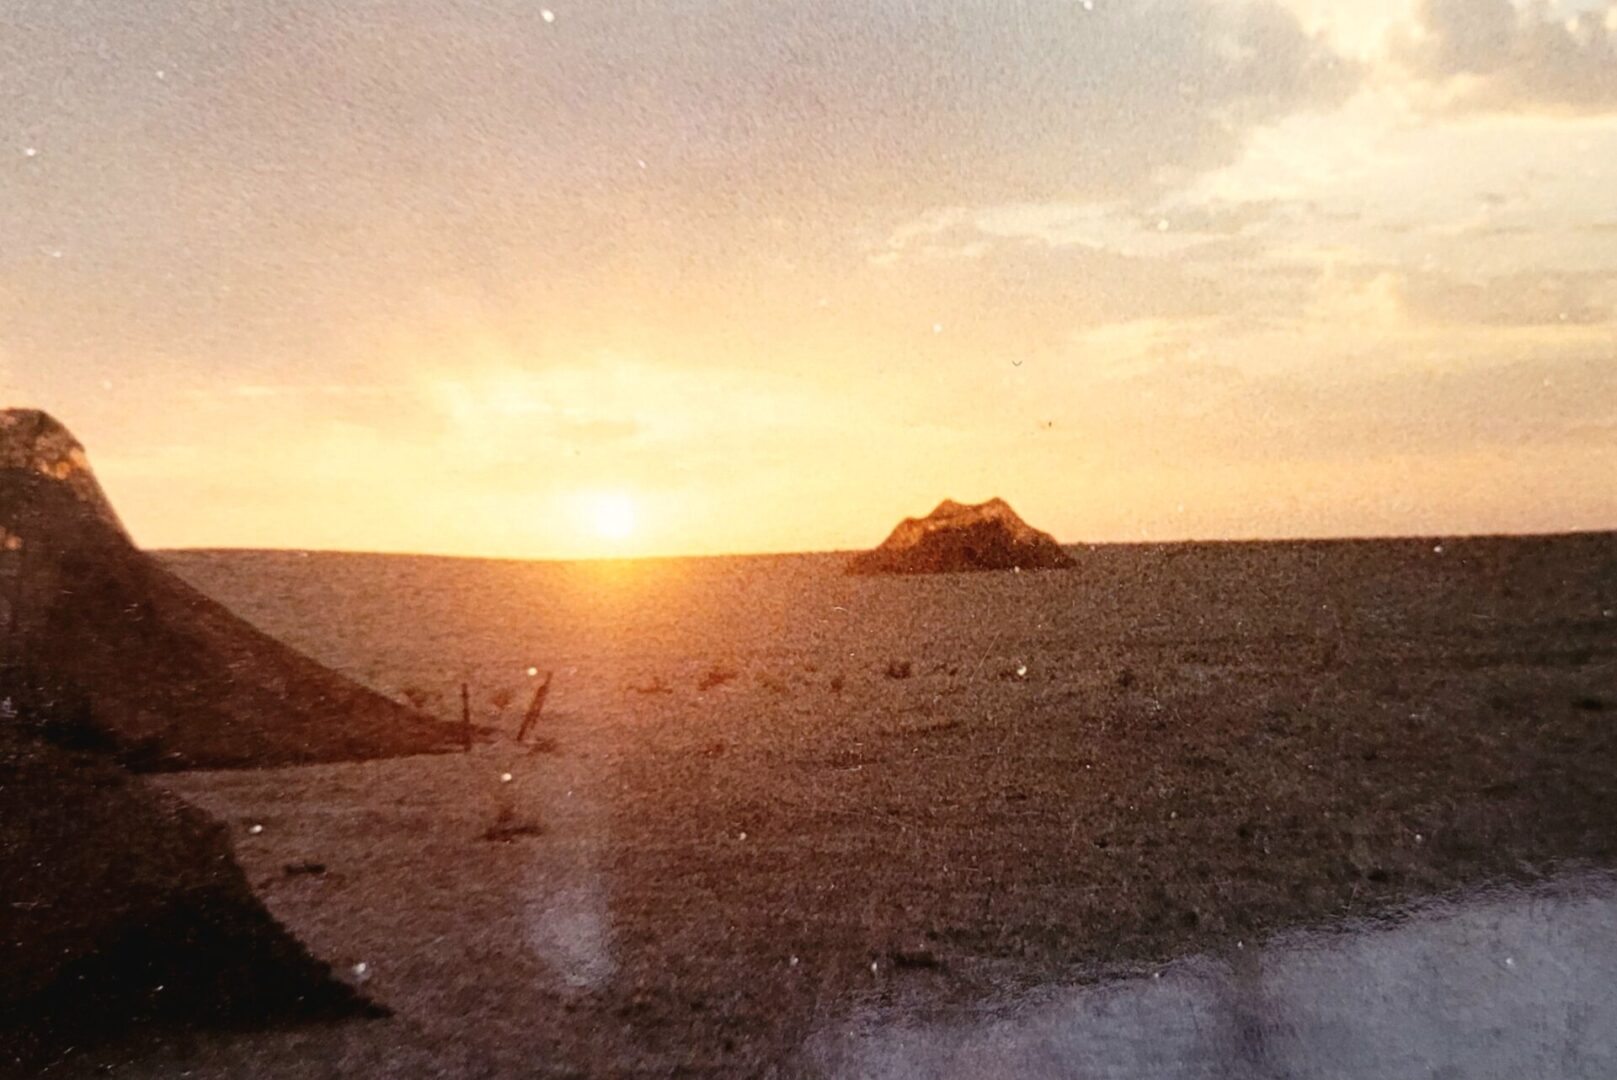 The Saudi desert at sunset